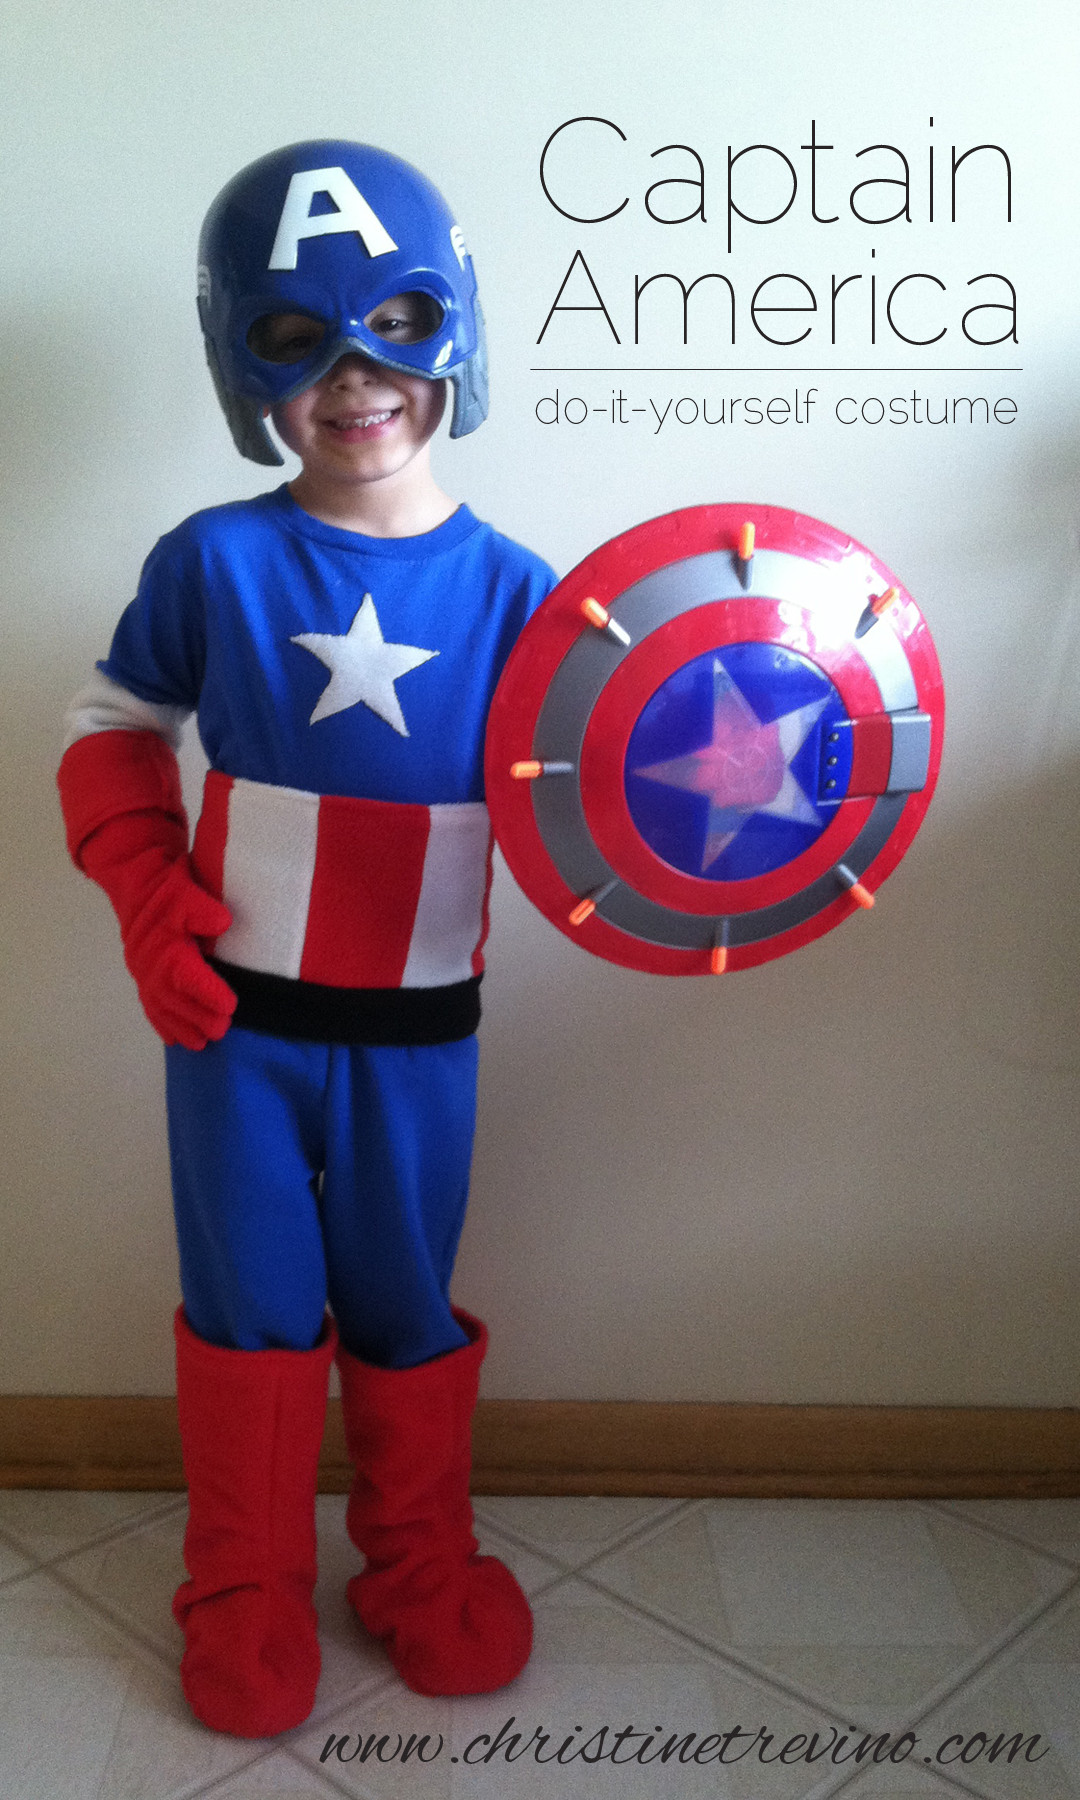 Best ideas about Captain America Costume DIY
. Save or Pin Captain America Costume Christine Trevino Now.